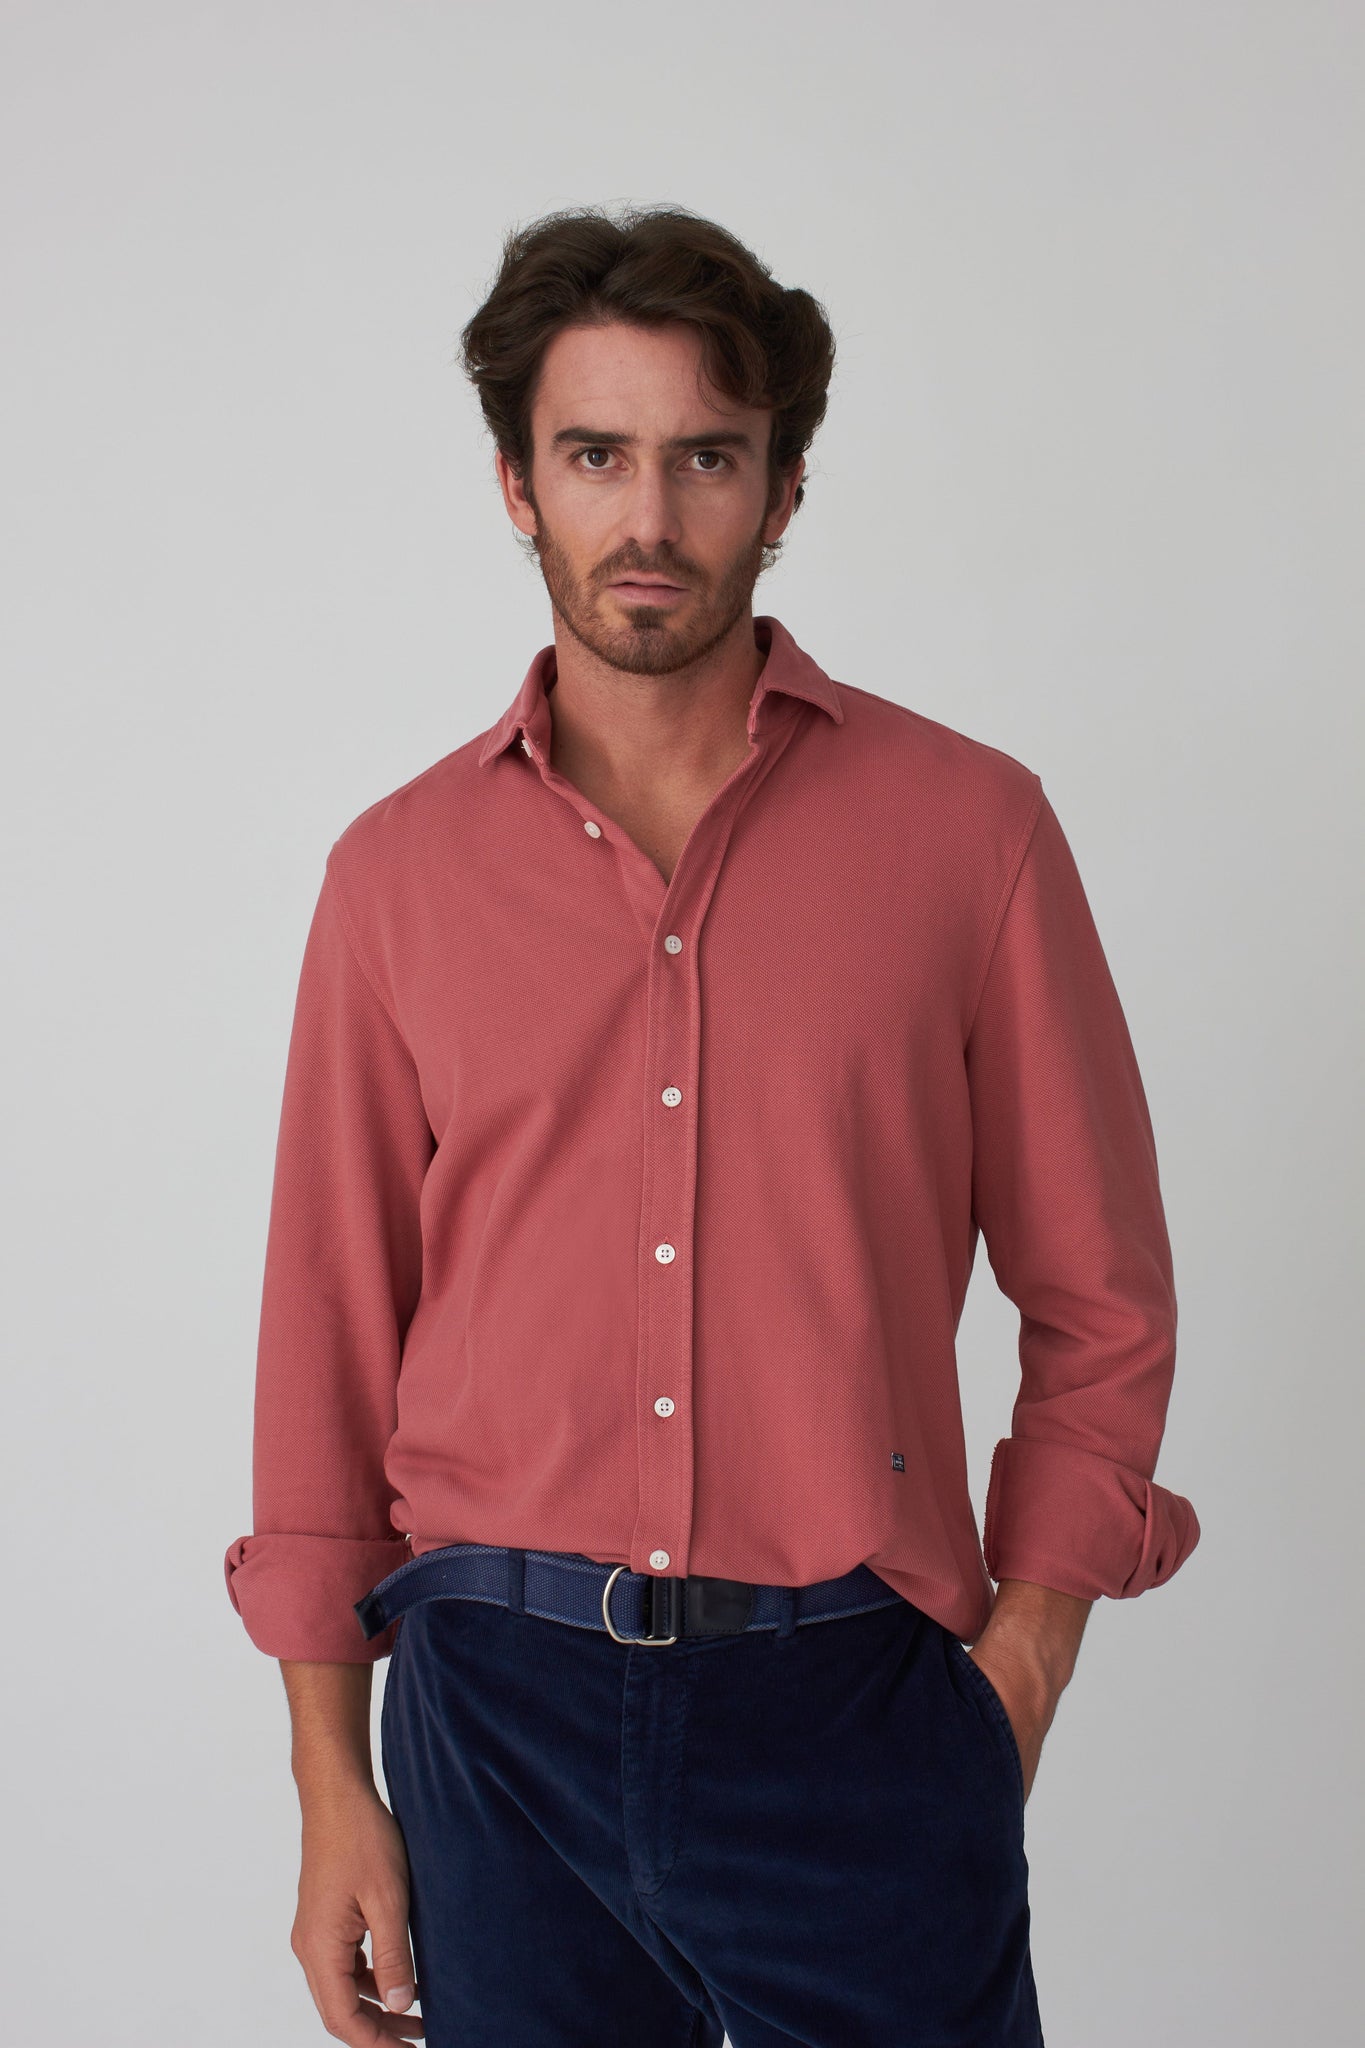 The Cotton Camisa Grana Viguera